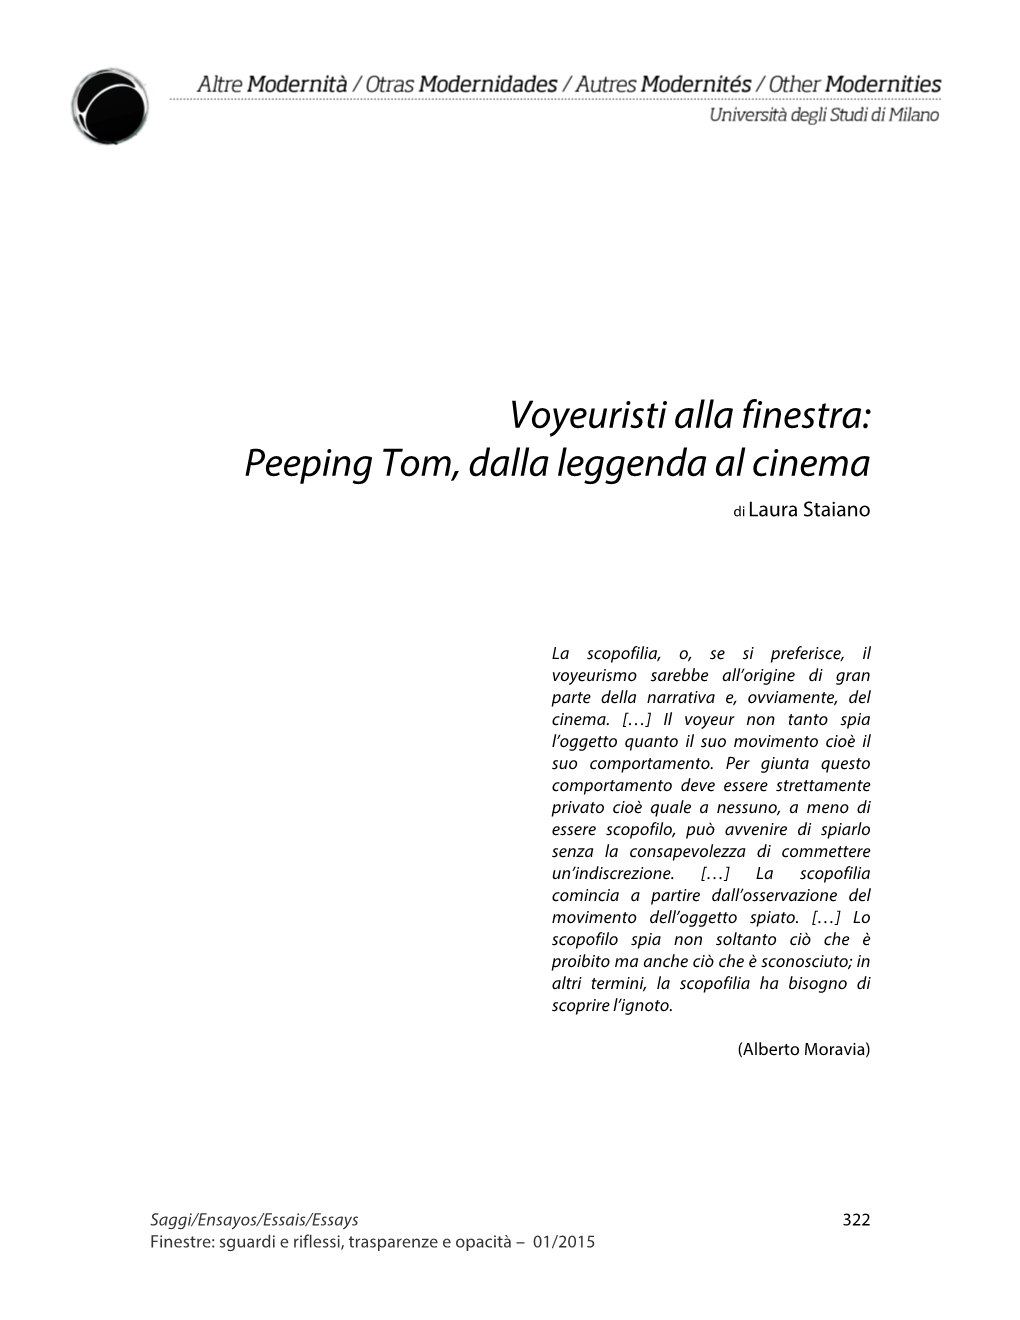 Voyeuristi Alla Finestra: Peeping Tom, Dalla Leggenda Al Cinema